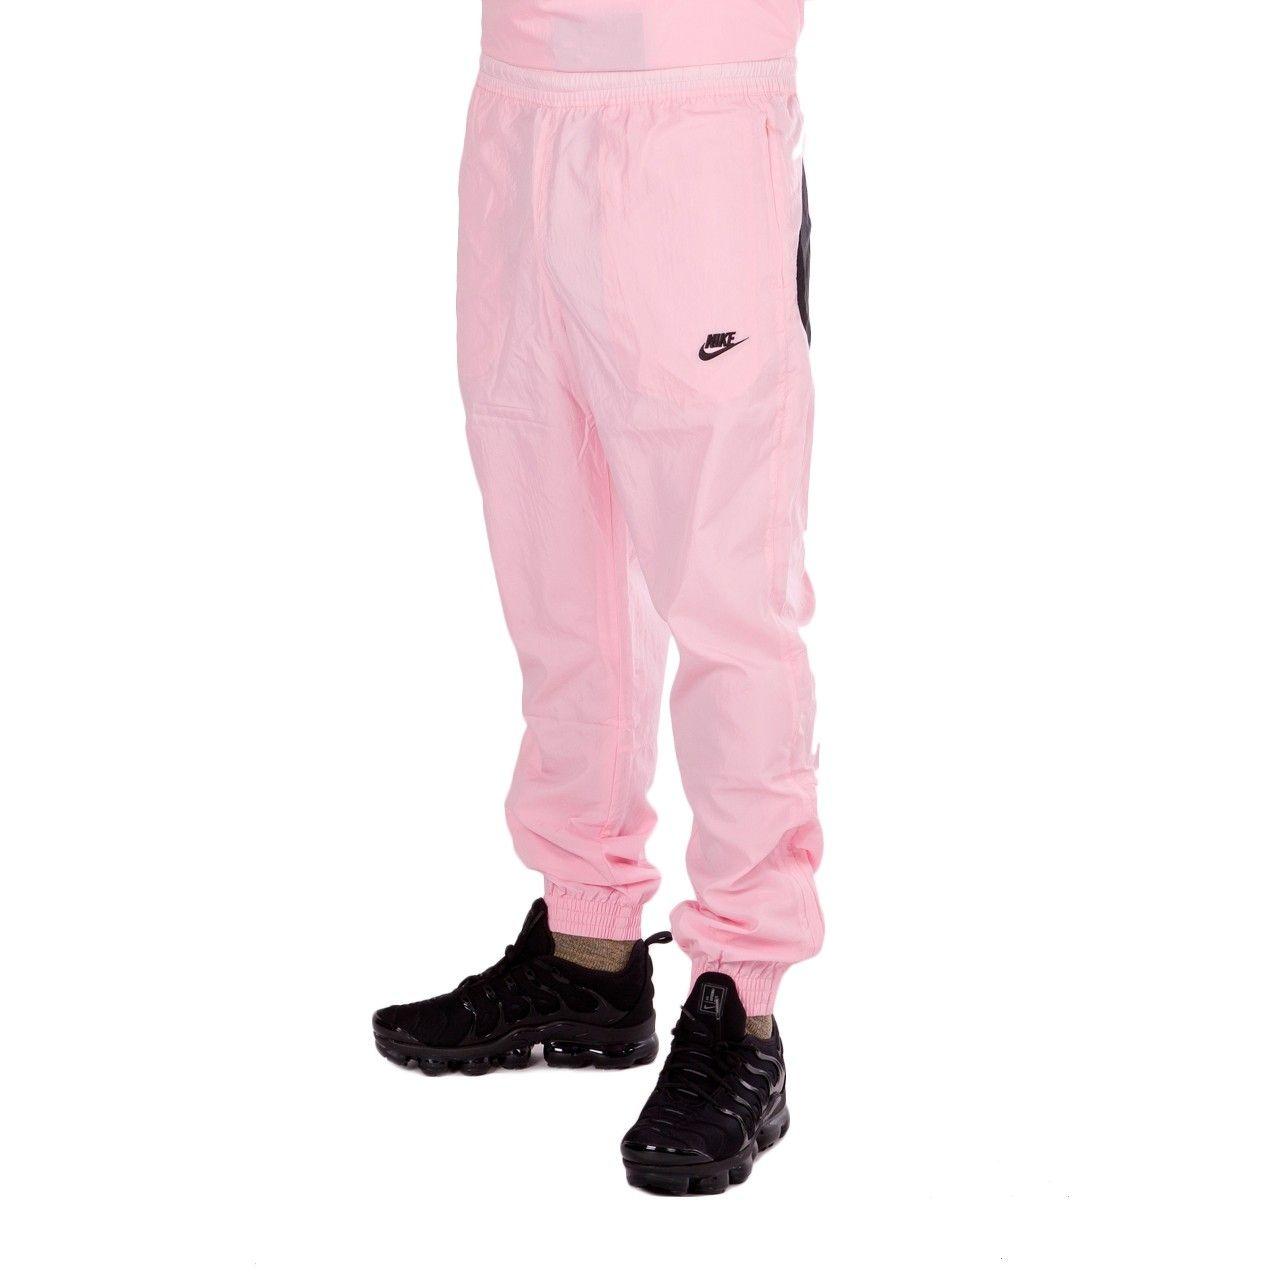 Pink and Black Nike Logo - Nike NSW Swoosh Woven Pants (Pink / Black) AJ2300 686